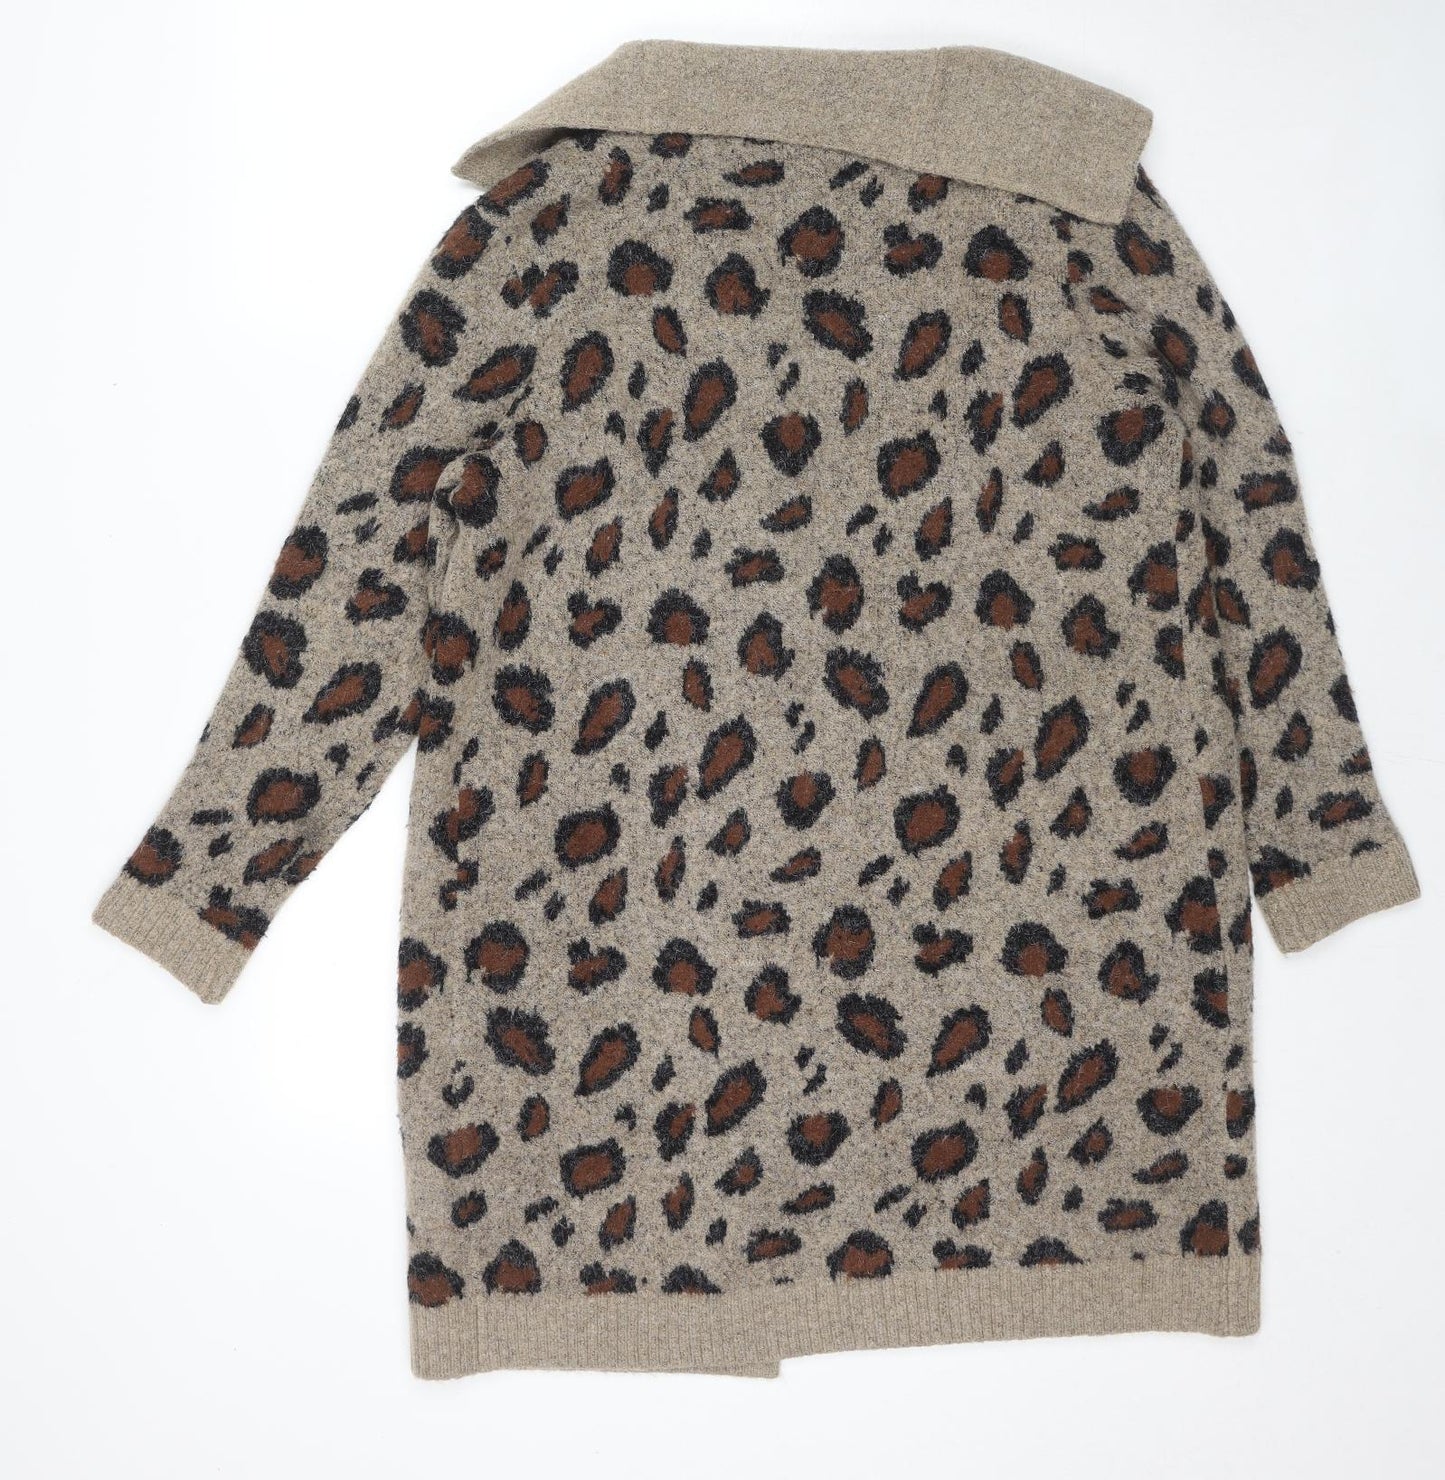 Klass Womens Brown Collared Animal Print Acrylic Cardigan Jumper Size M - Open